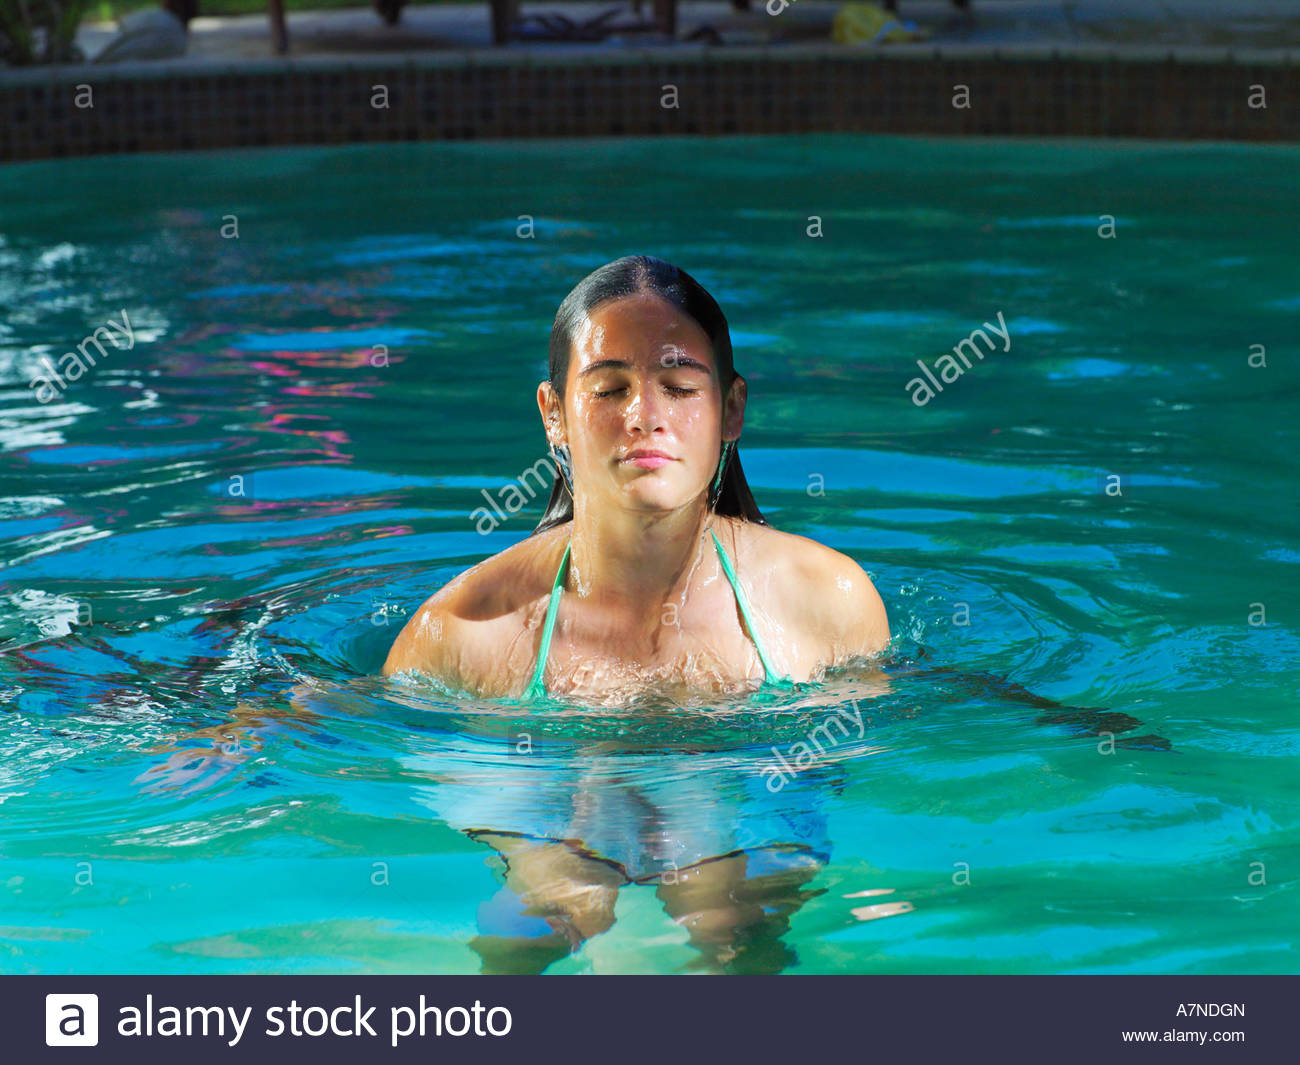 Girl In Swimming Pool Xxxpornbase